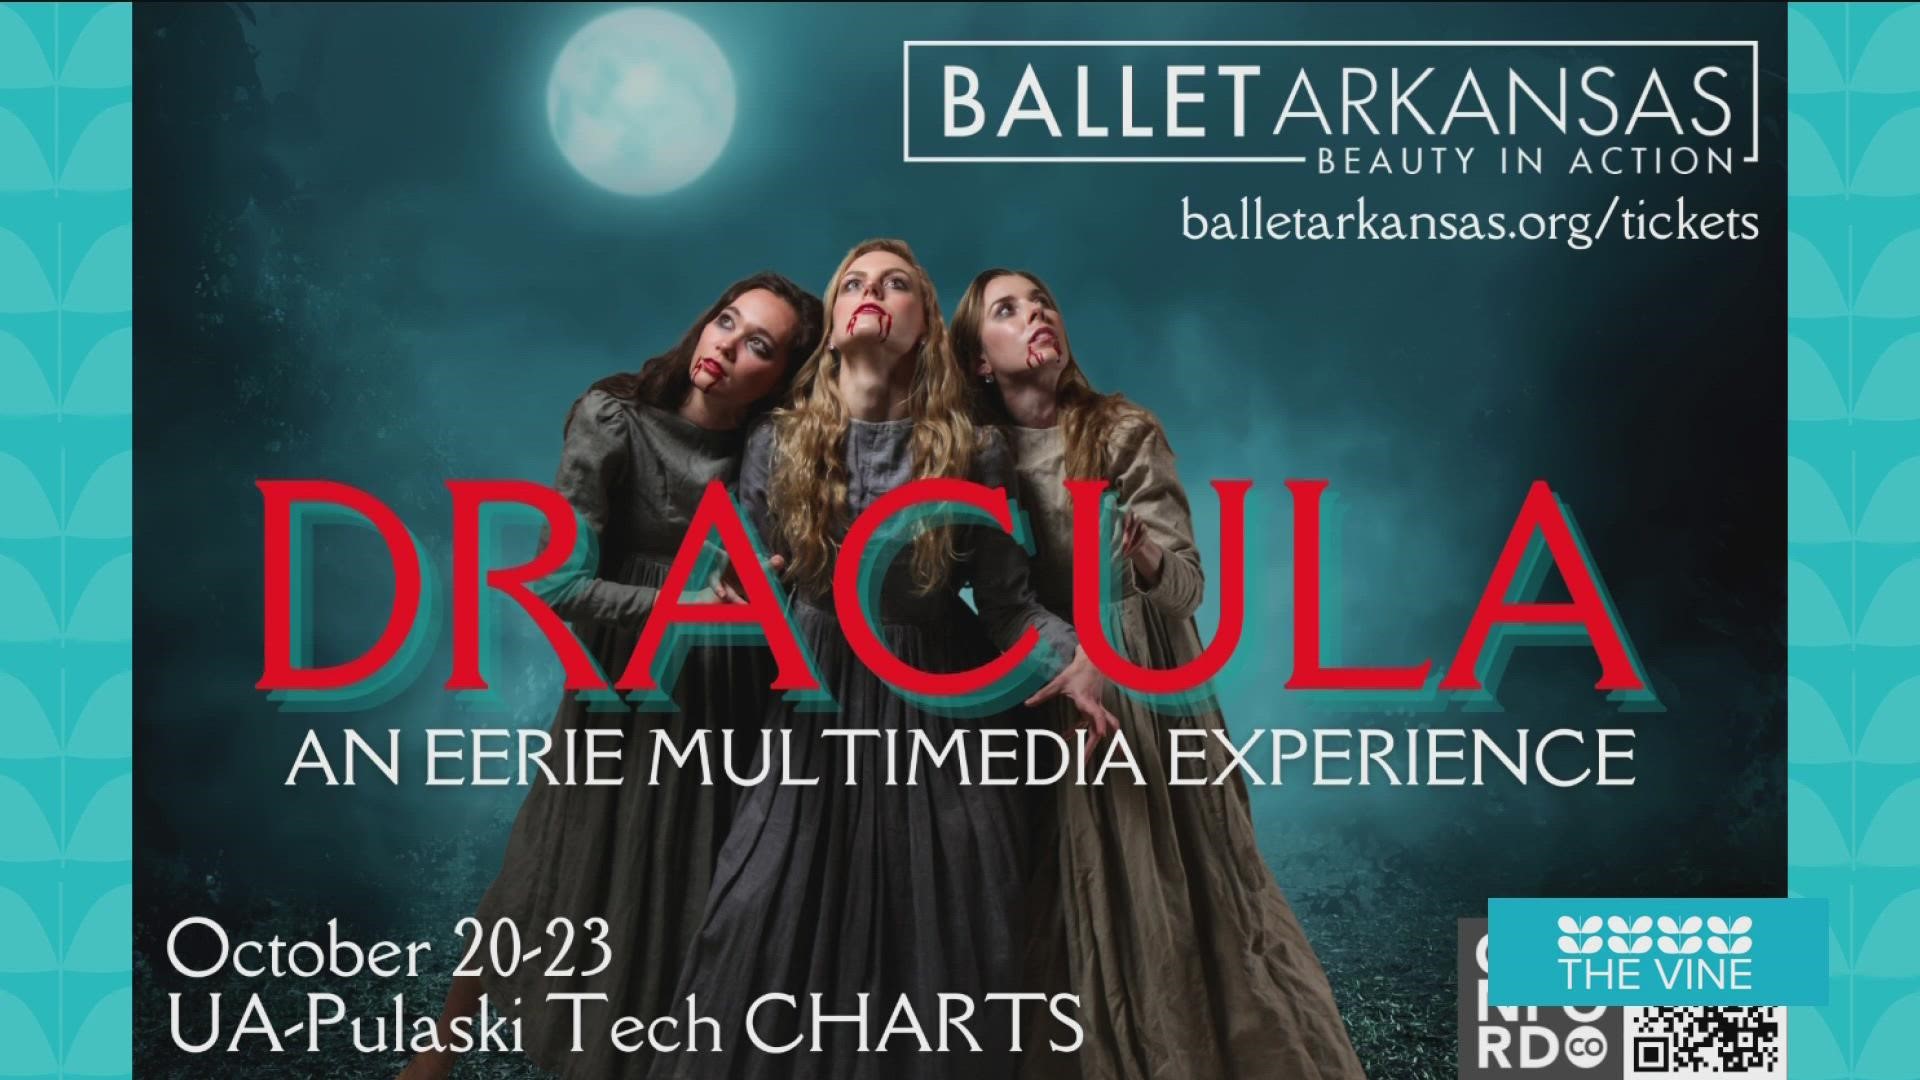 Learn more at balletarkansas.org!